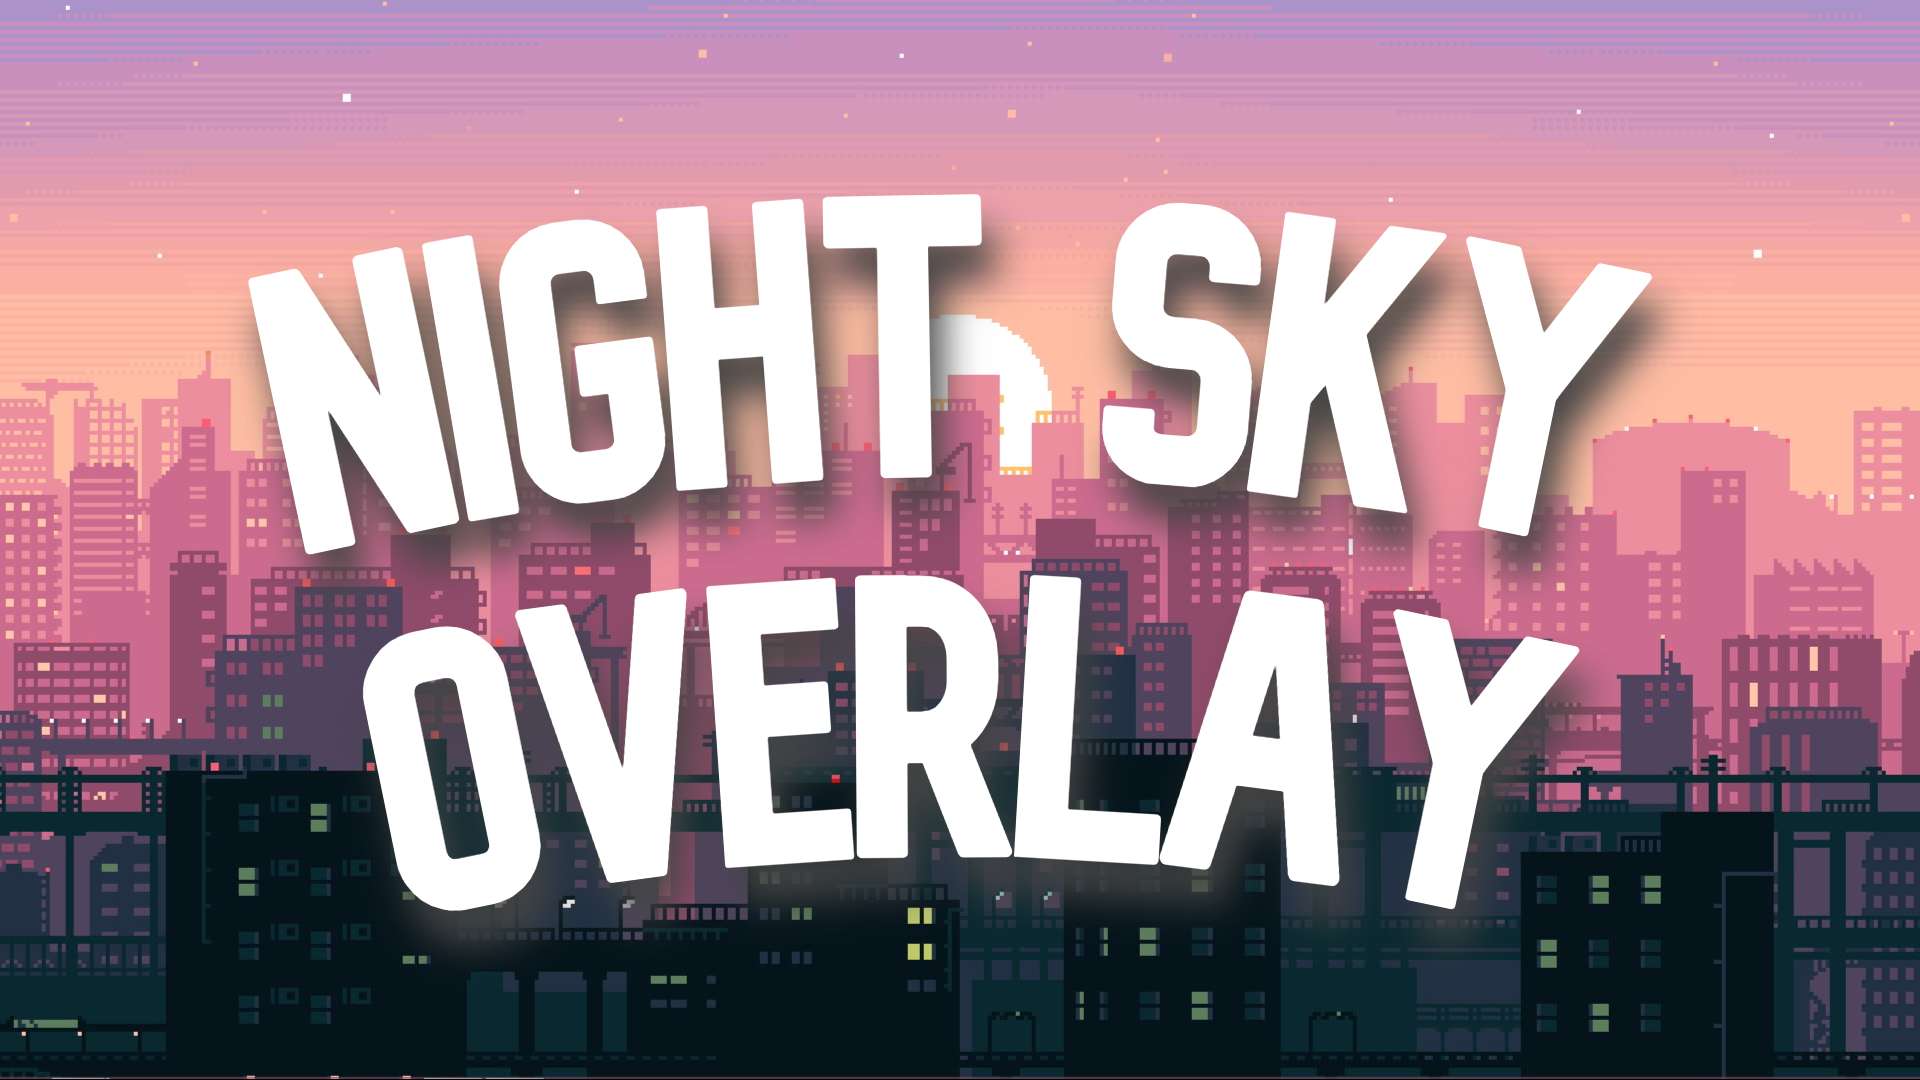 Night Sky Overlay #8 16x by rh56 on PvPRP